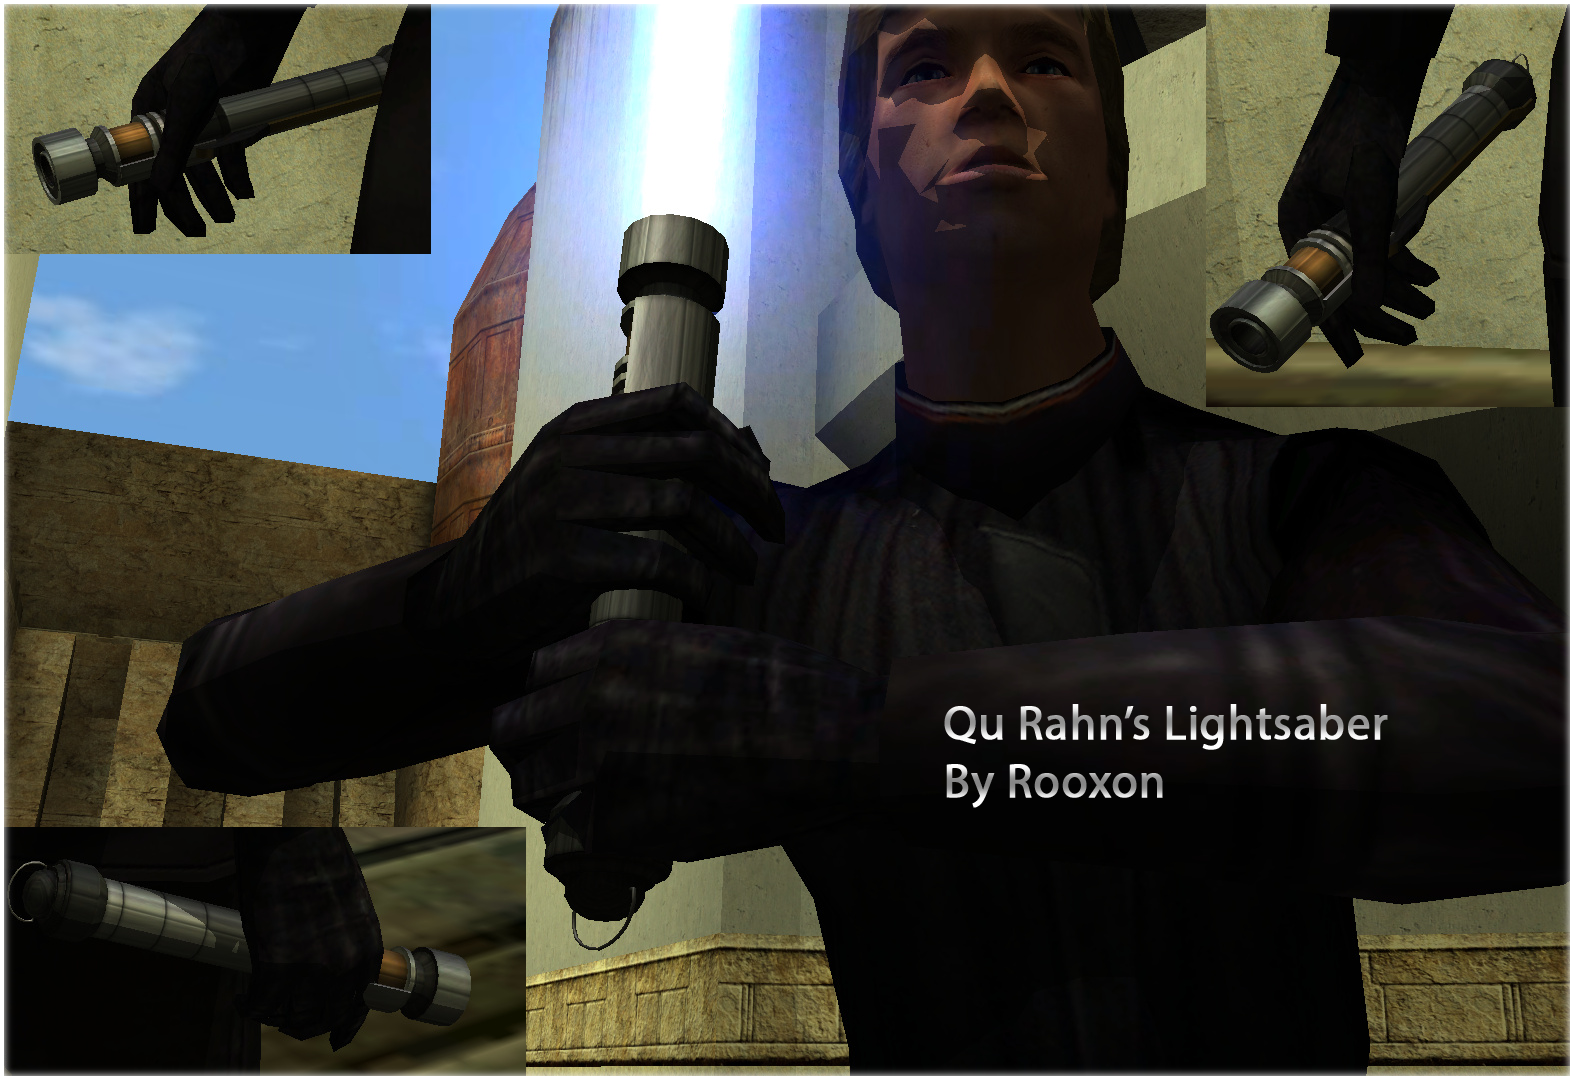 More information about "Qu Rahn's Lightsaber"